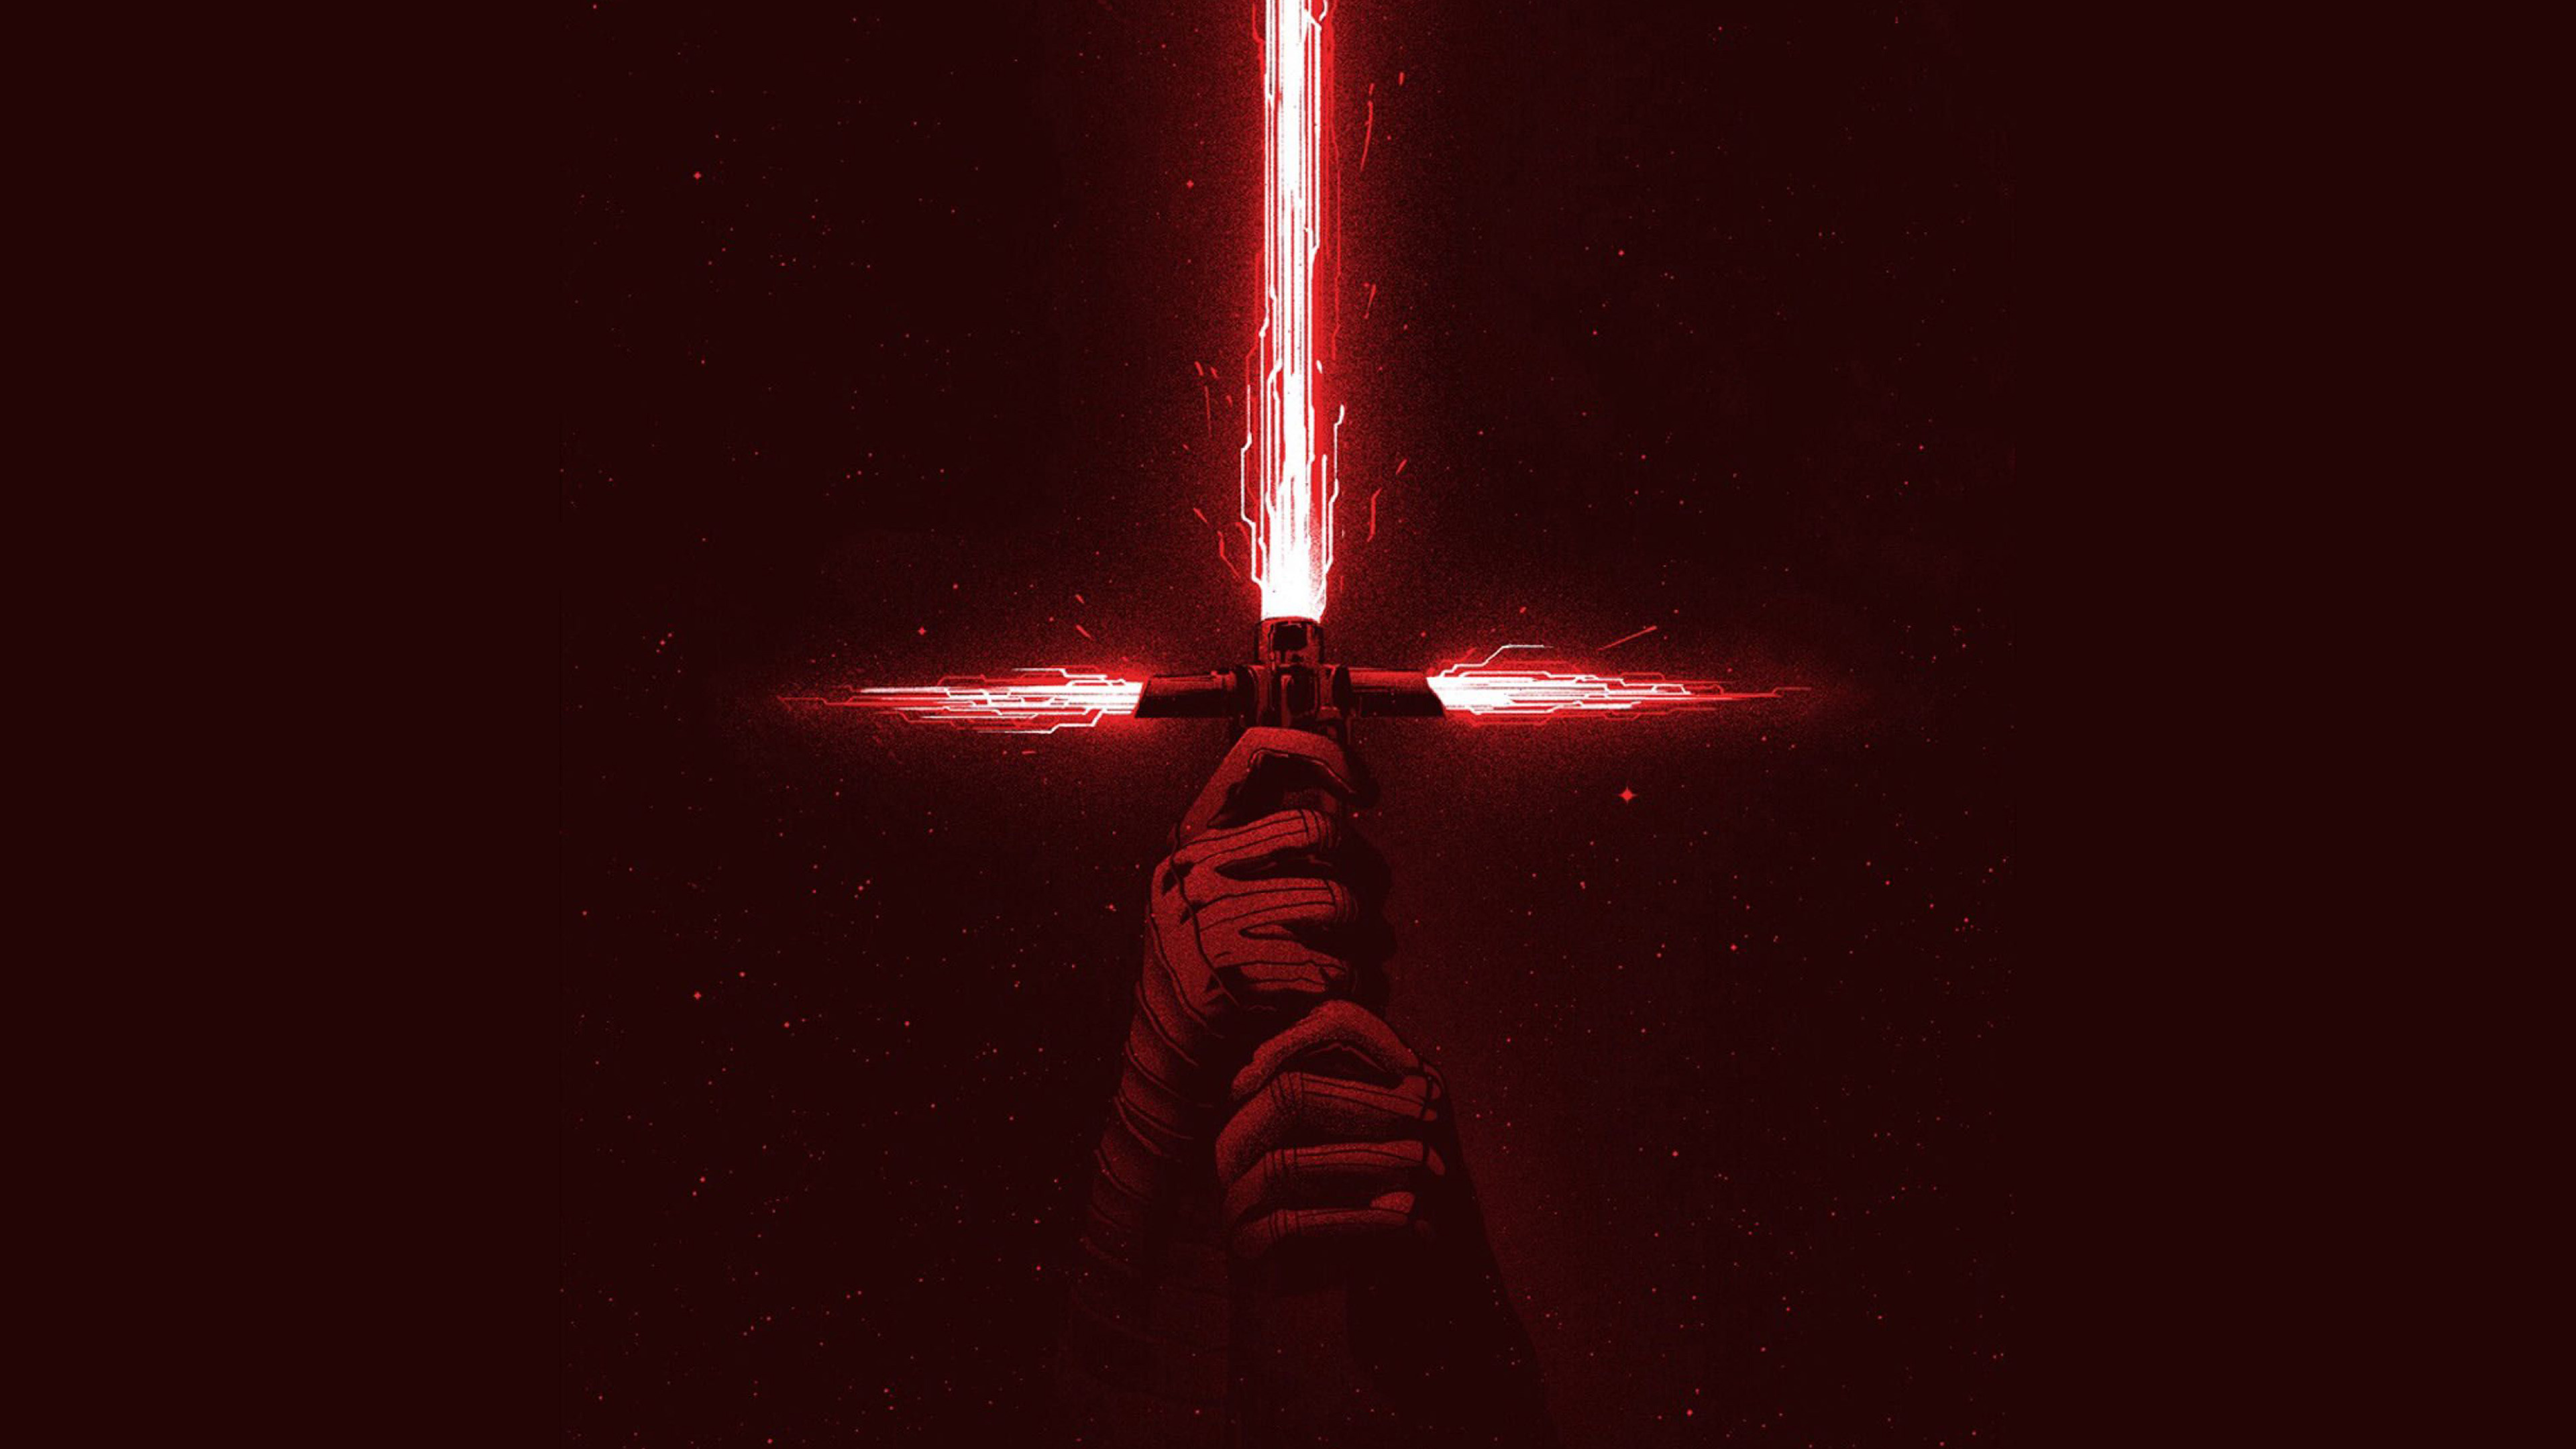 Star Wars Jedi film art, Red illustration wallpaper, 3840x2160 4K Desktop